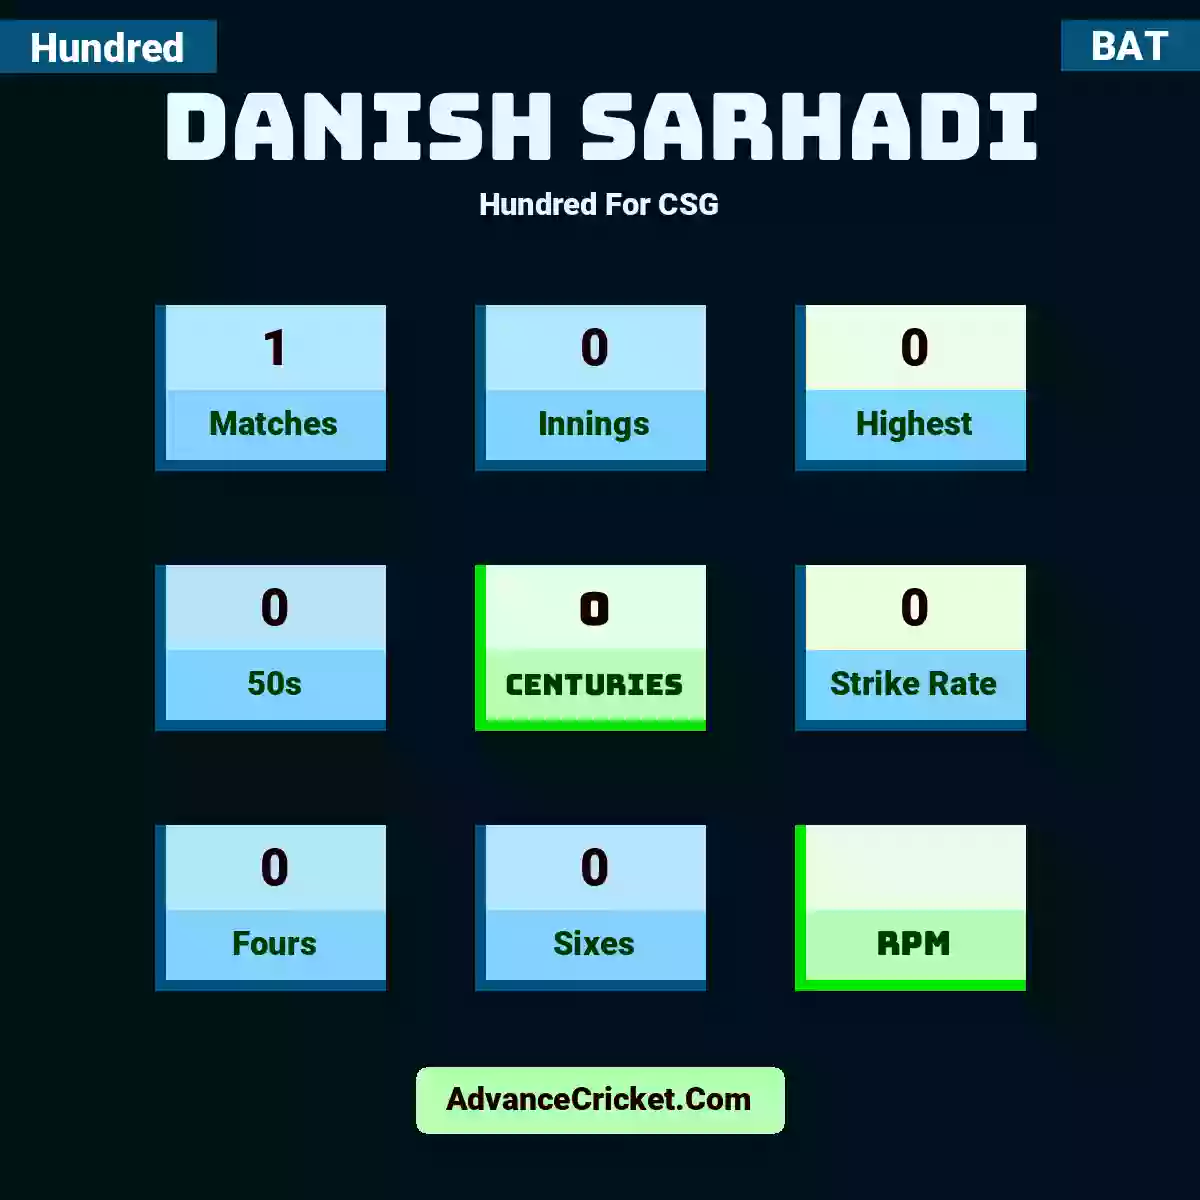 Danish Sarhadi Hundred  For CSG, Danish Sarhadi played 1 matches, scored 0 runs as highest, 0 half-centuries, and 0 centuries, with a strike rate of 0. D.Sarhadi hit 0 fours and 0 sixes.